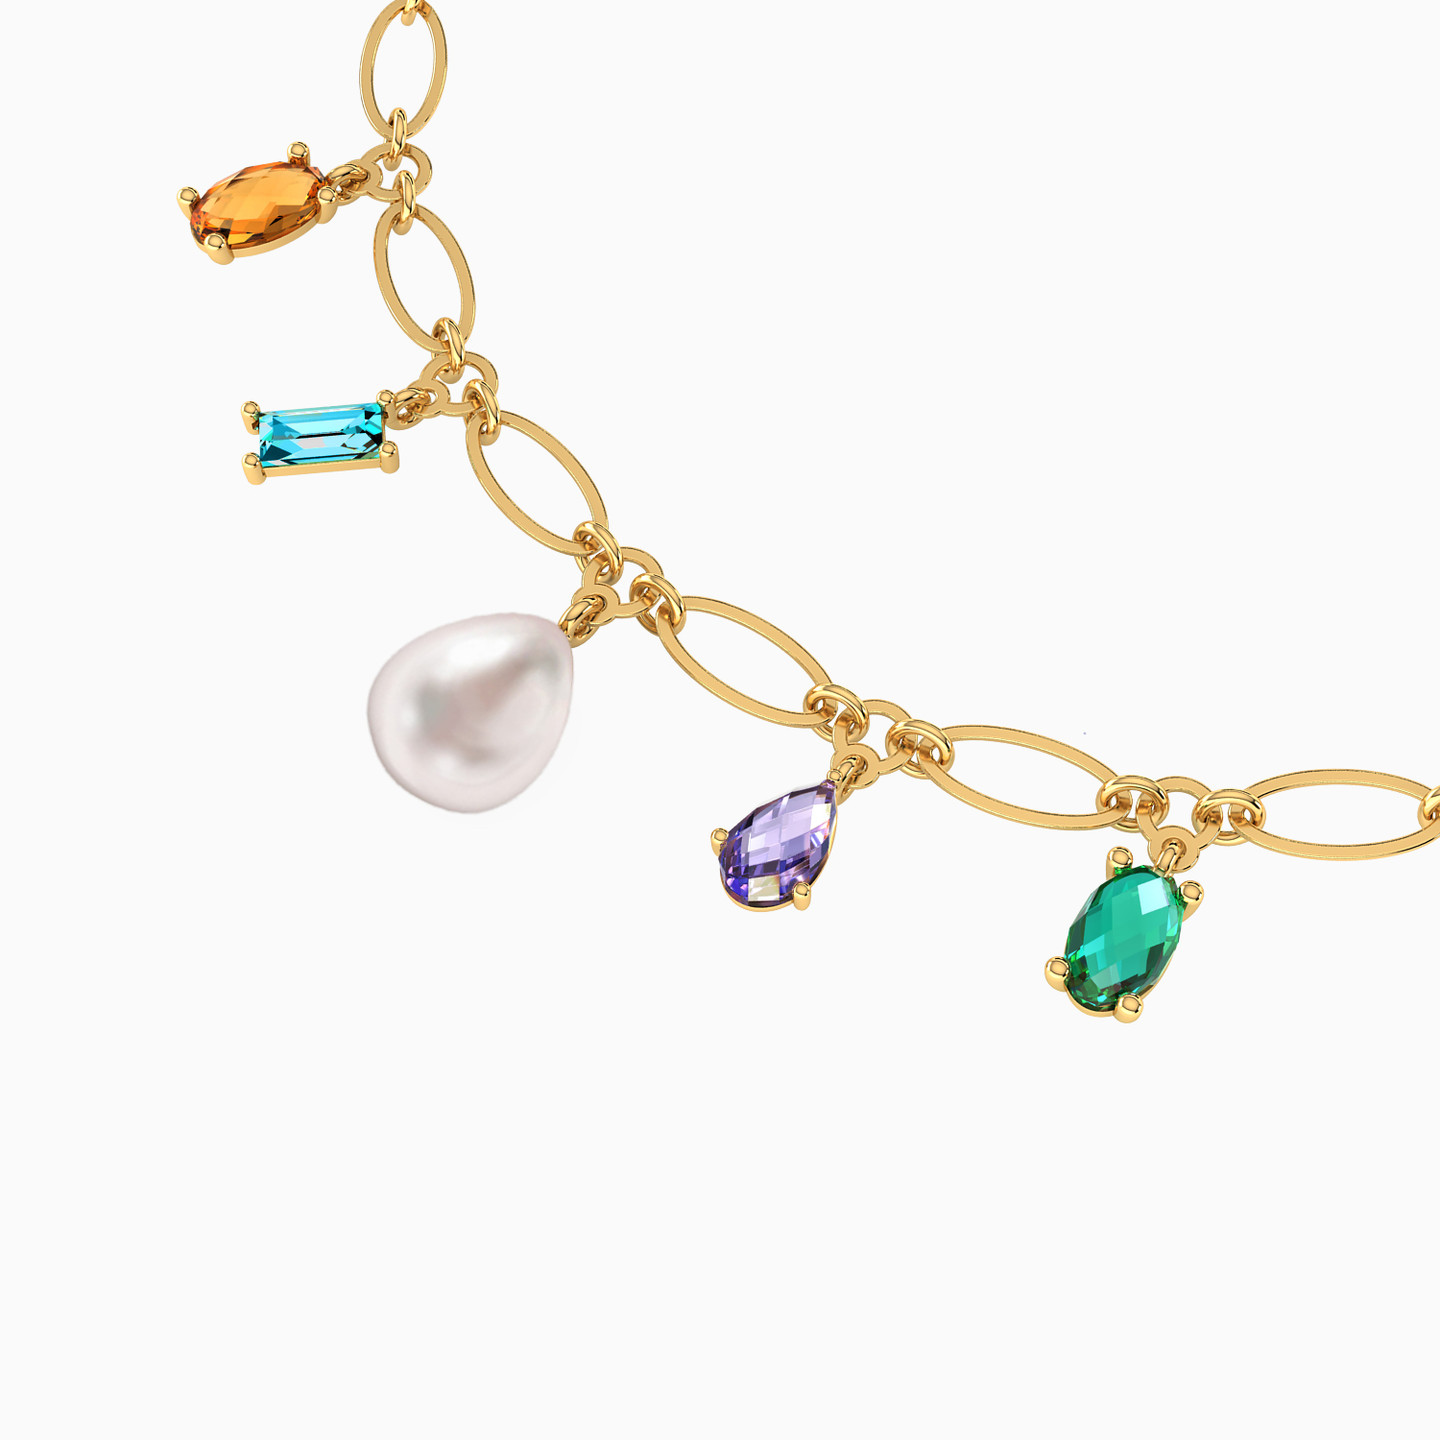 18K Gold Pearls & Colored Stones Charm Bracelet - 3